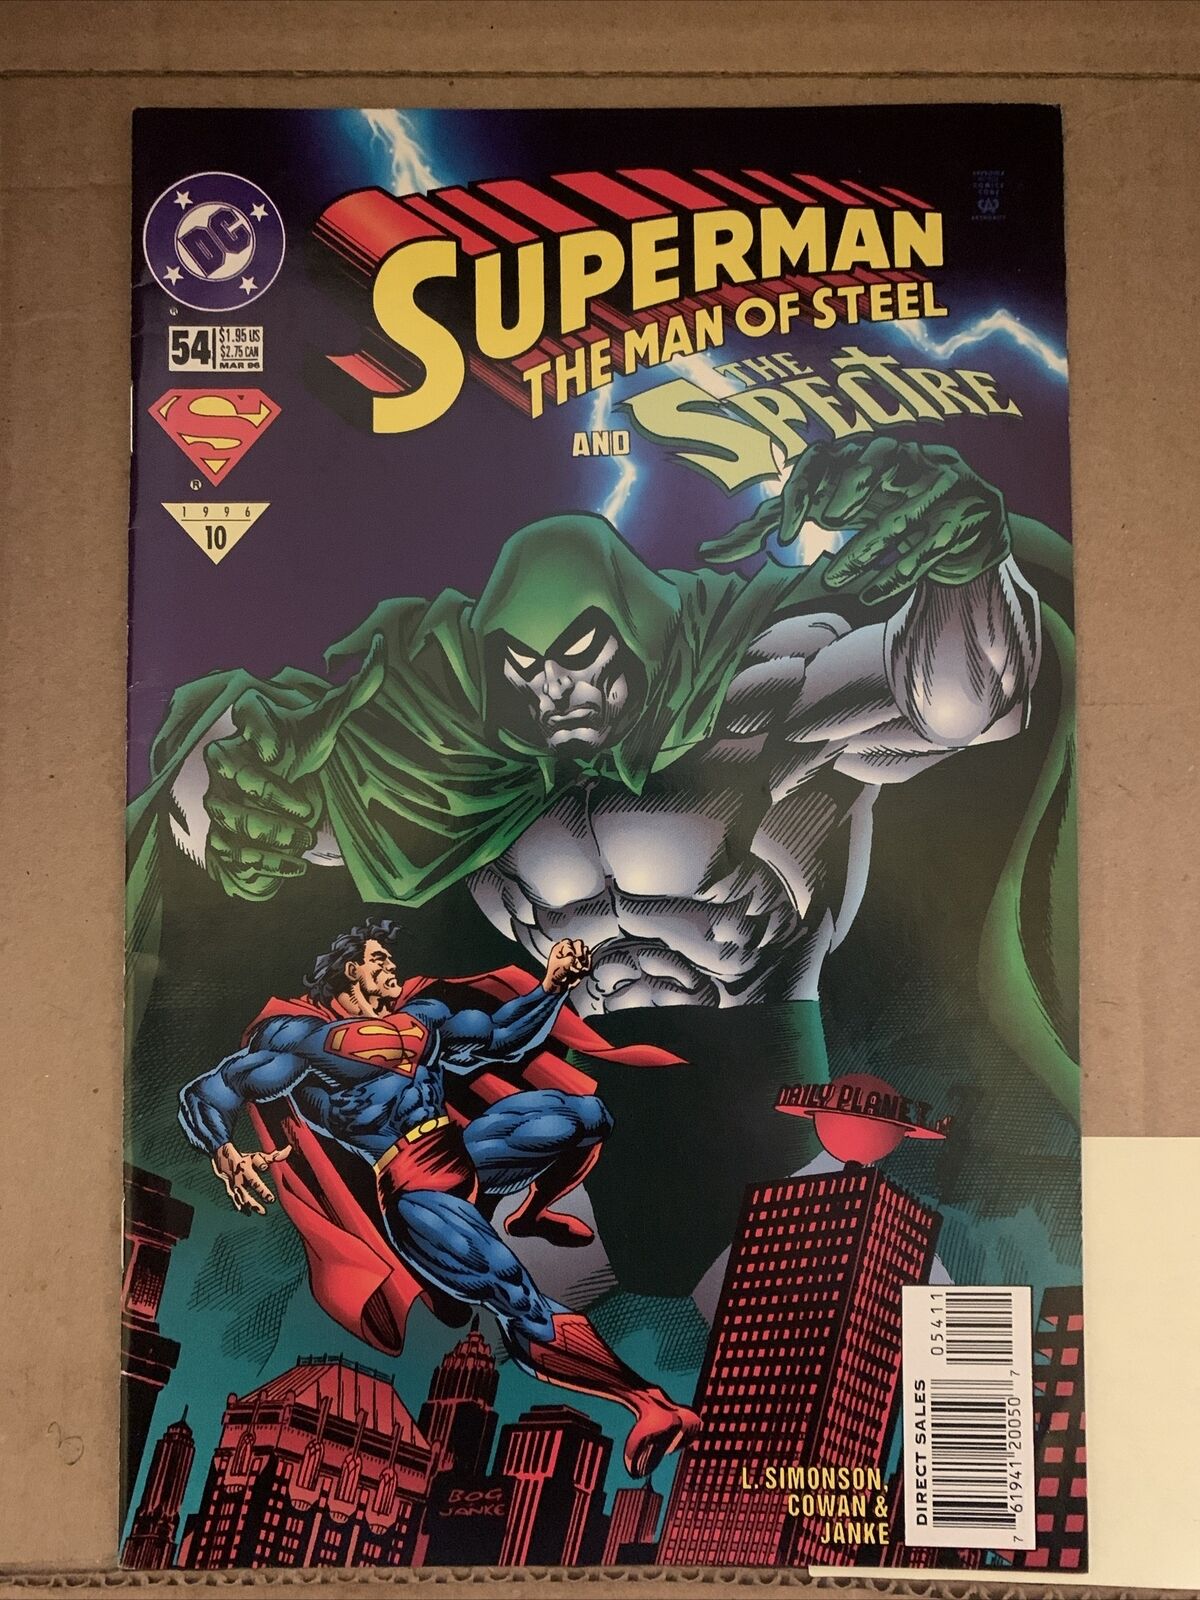 SUPERMAN: THE MAN OF STEEL #54 DC COMIC BOOK